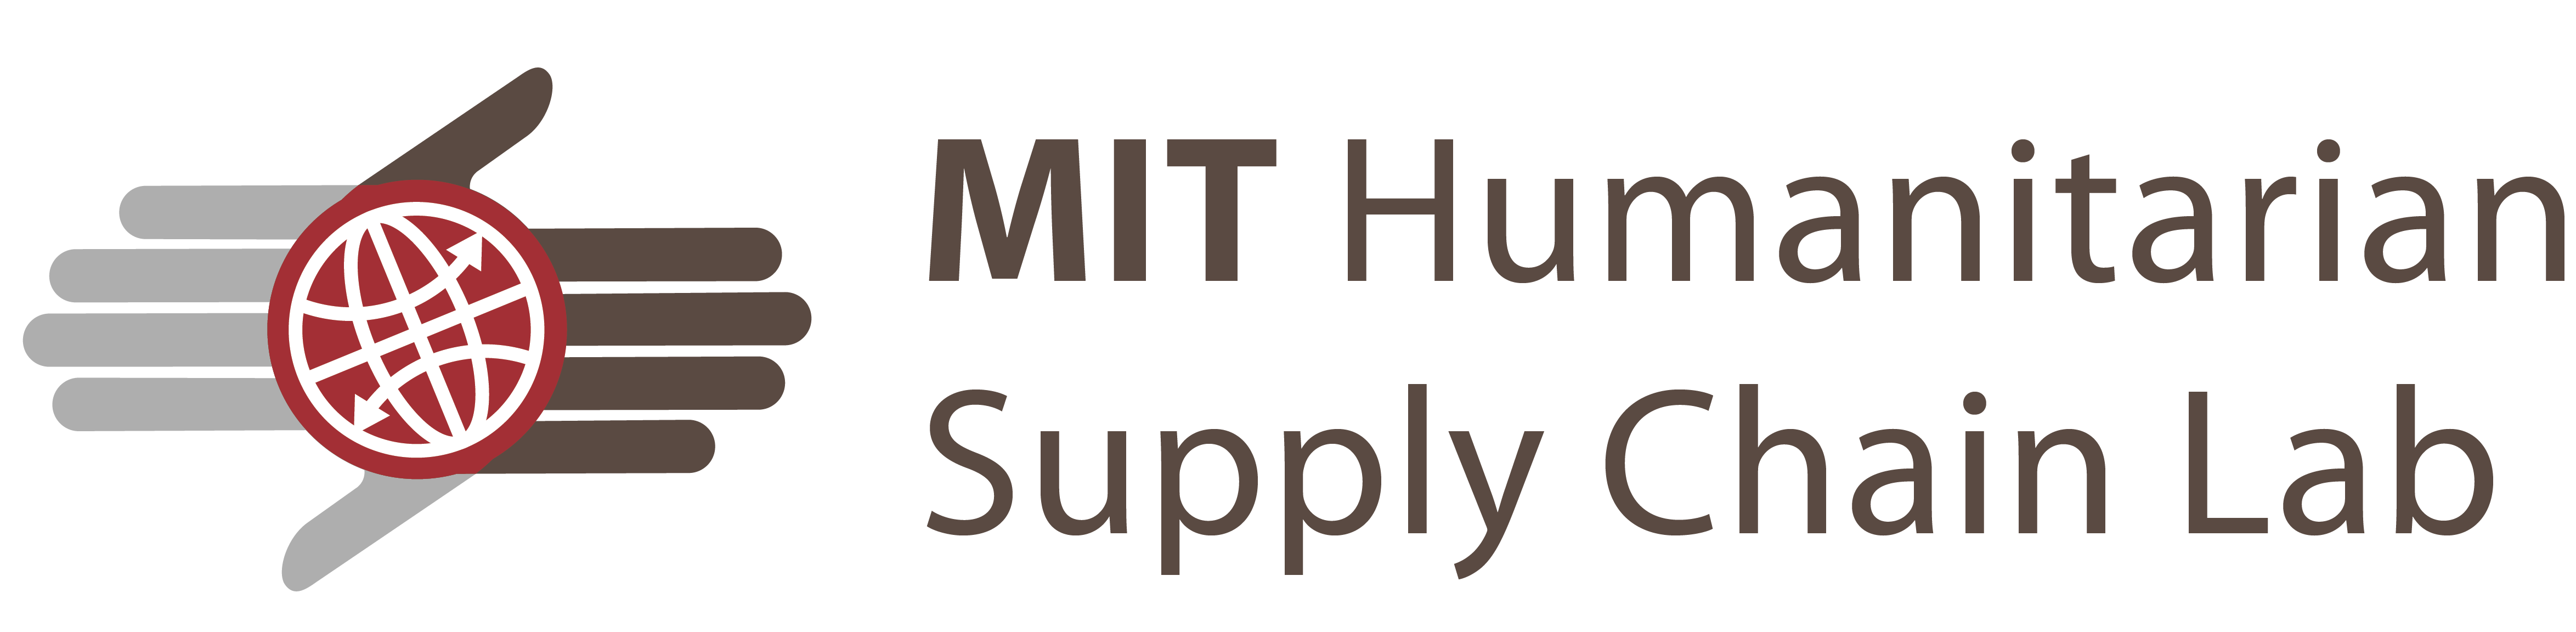 MIT Humanitarian Supply Chain Lab